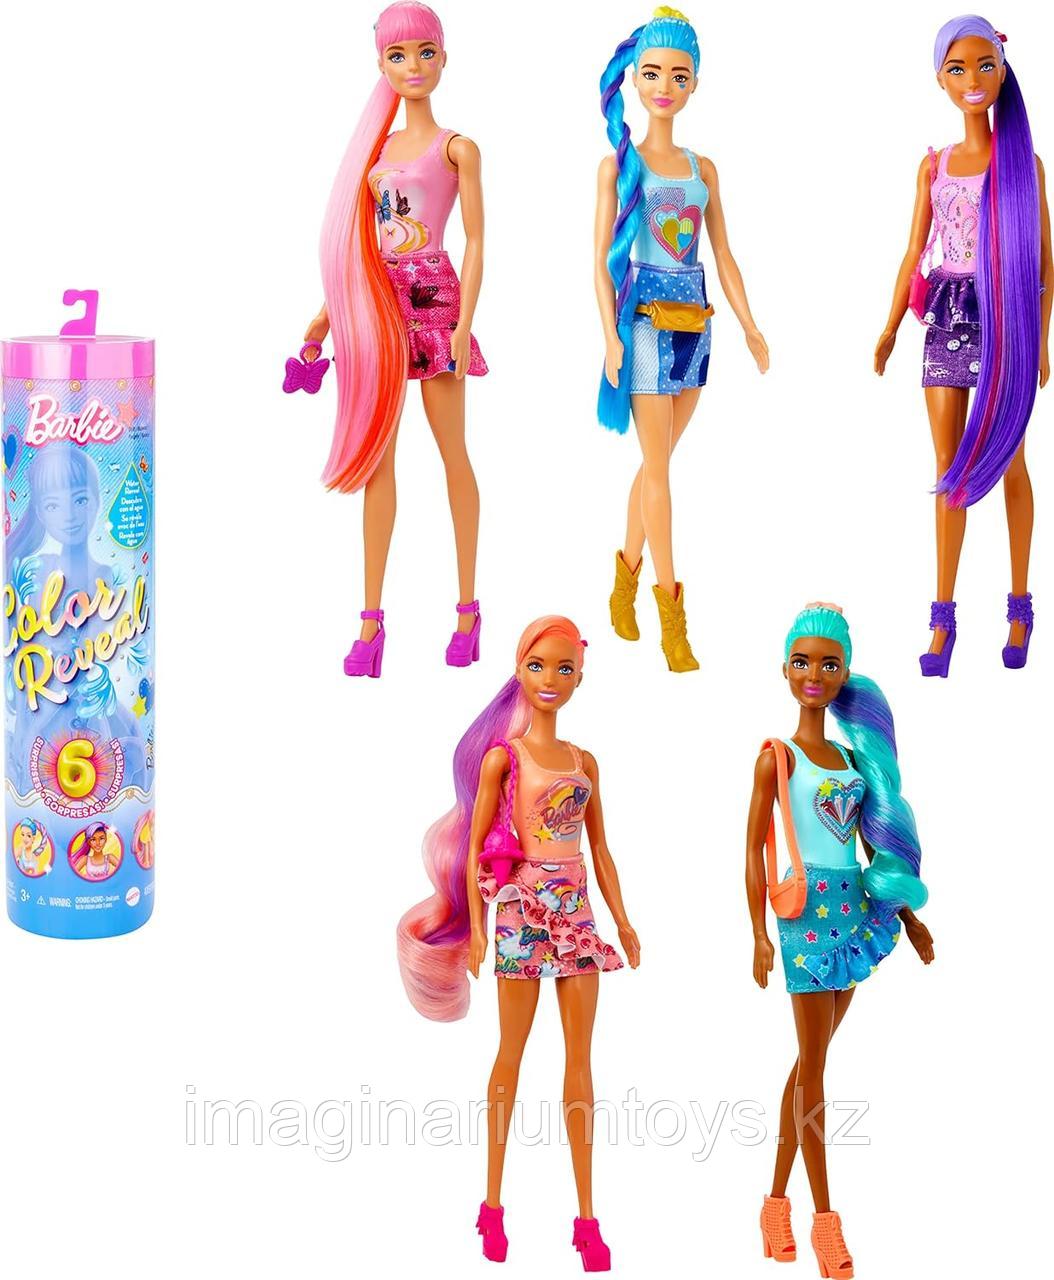 Кукла Barbie Color Reveal серия Totally Denim, фото 1